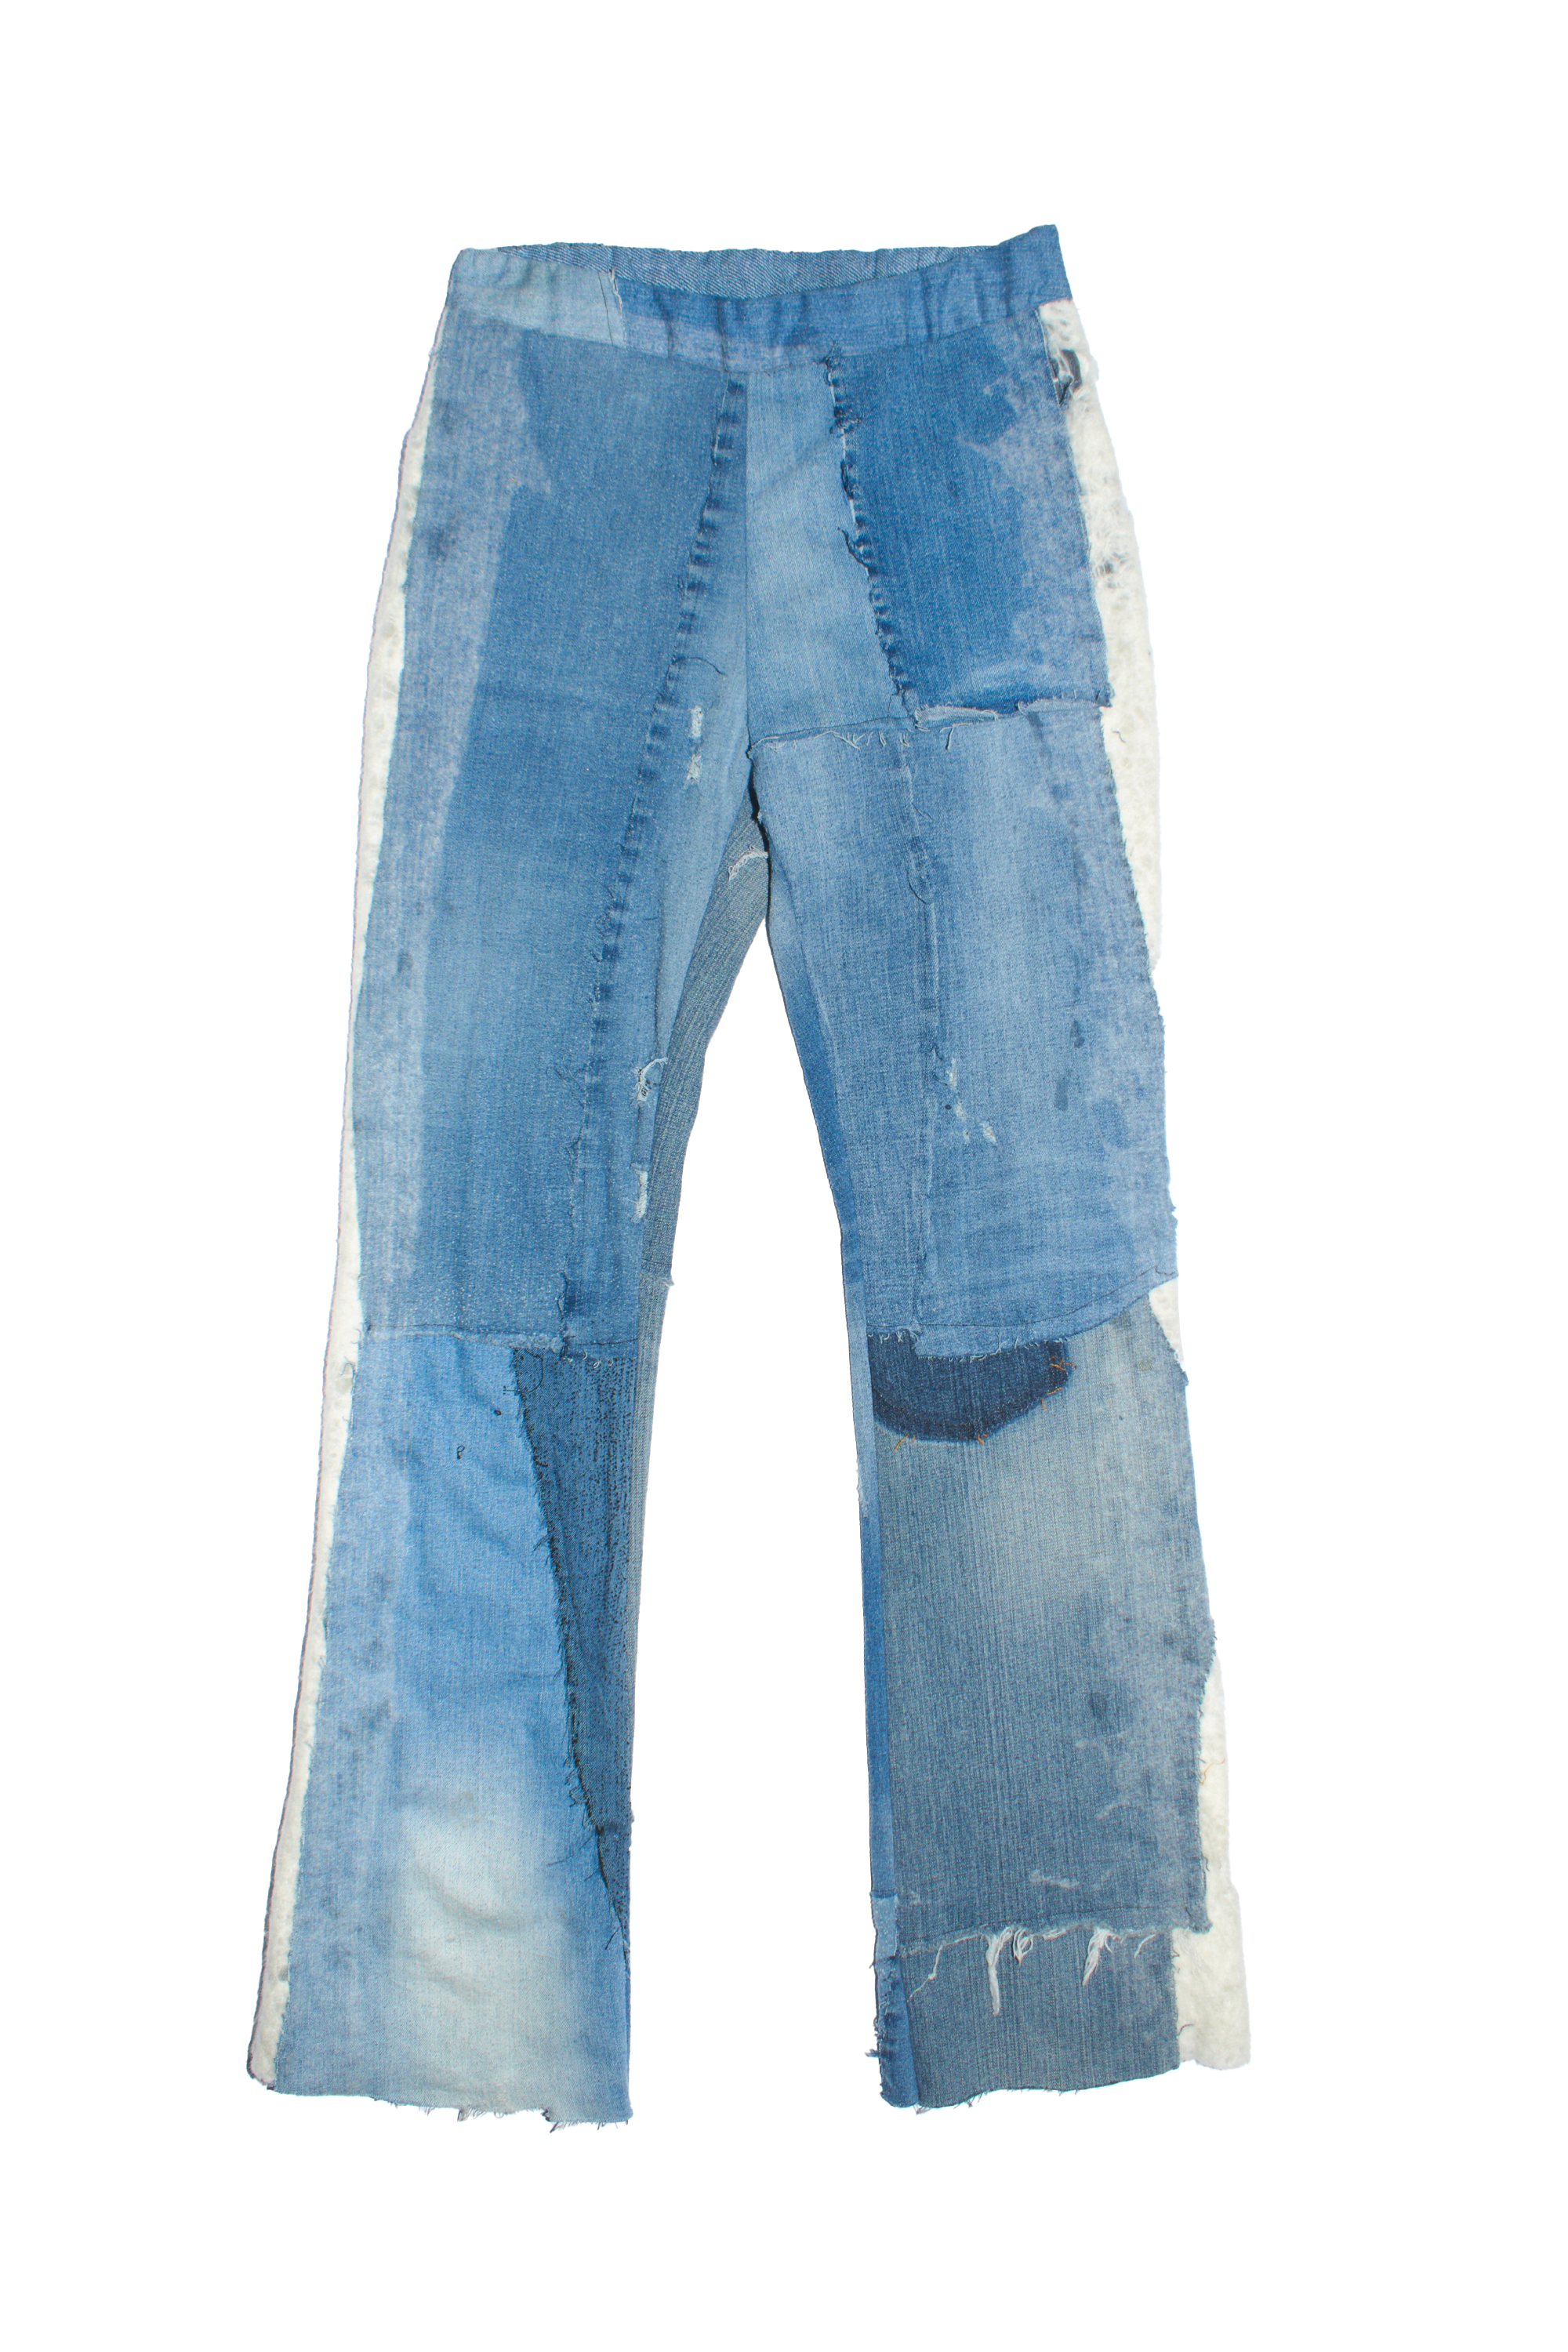 Off-White Patchwork Denim Jeans